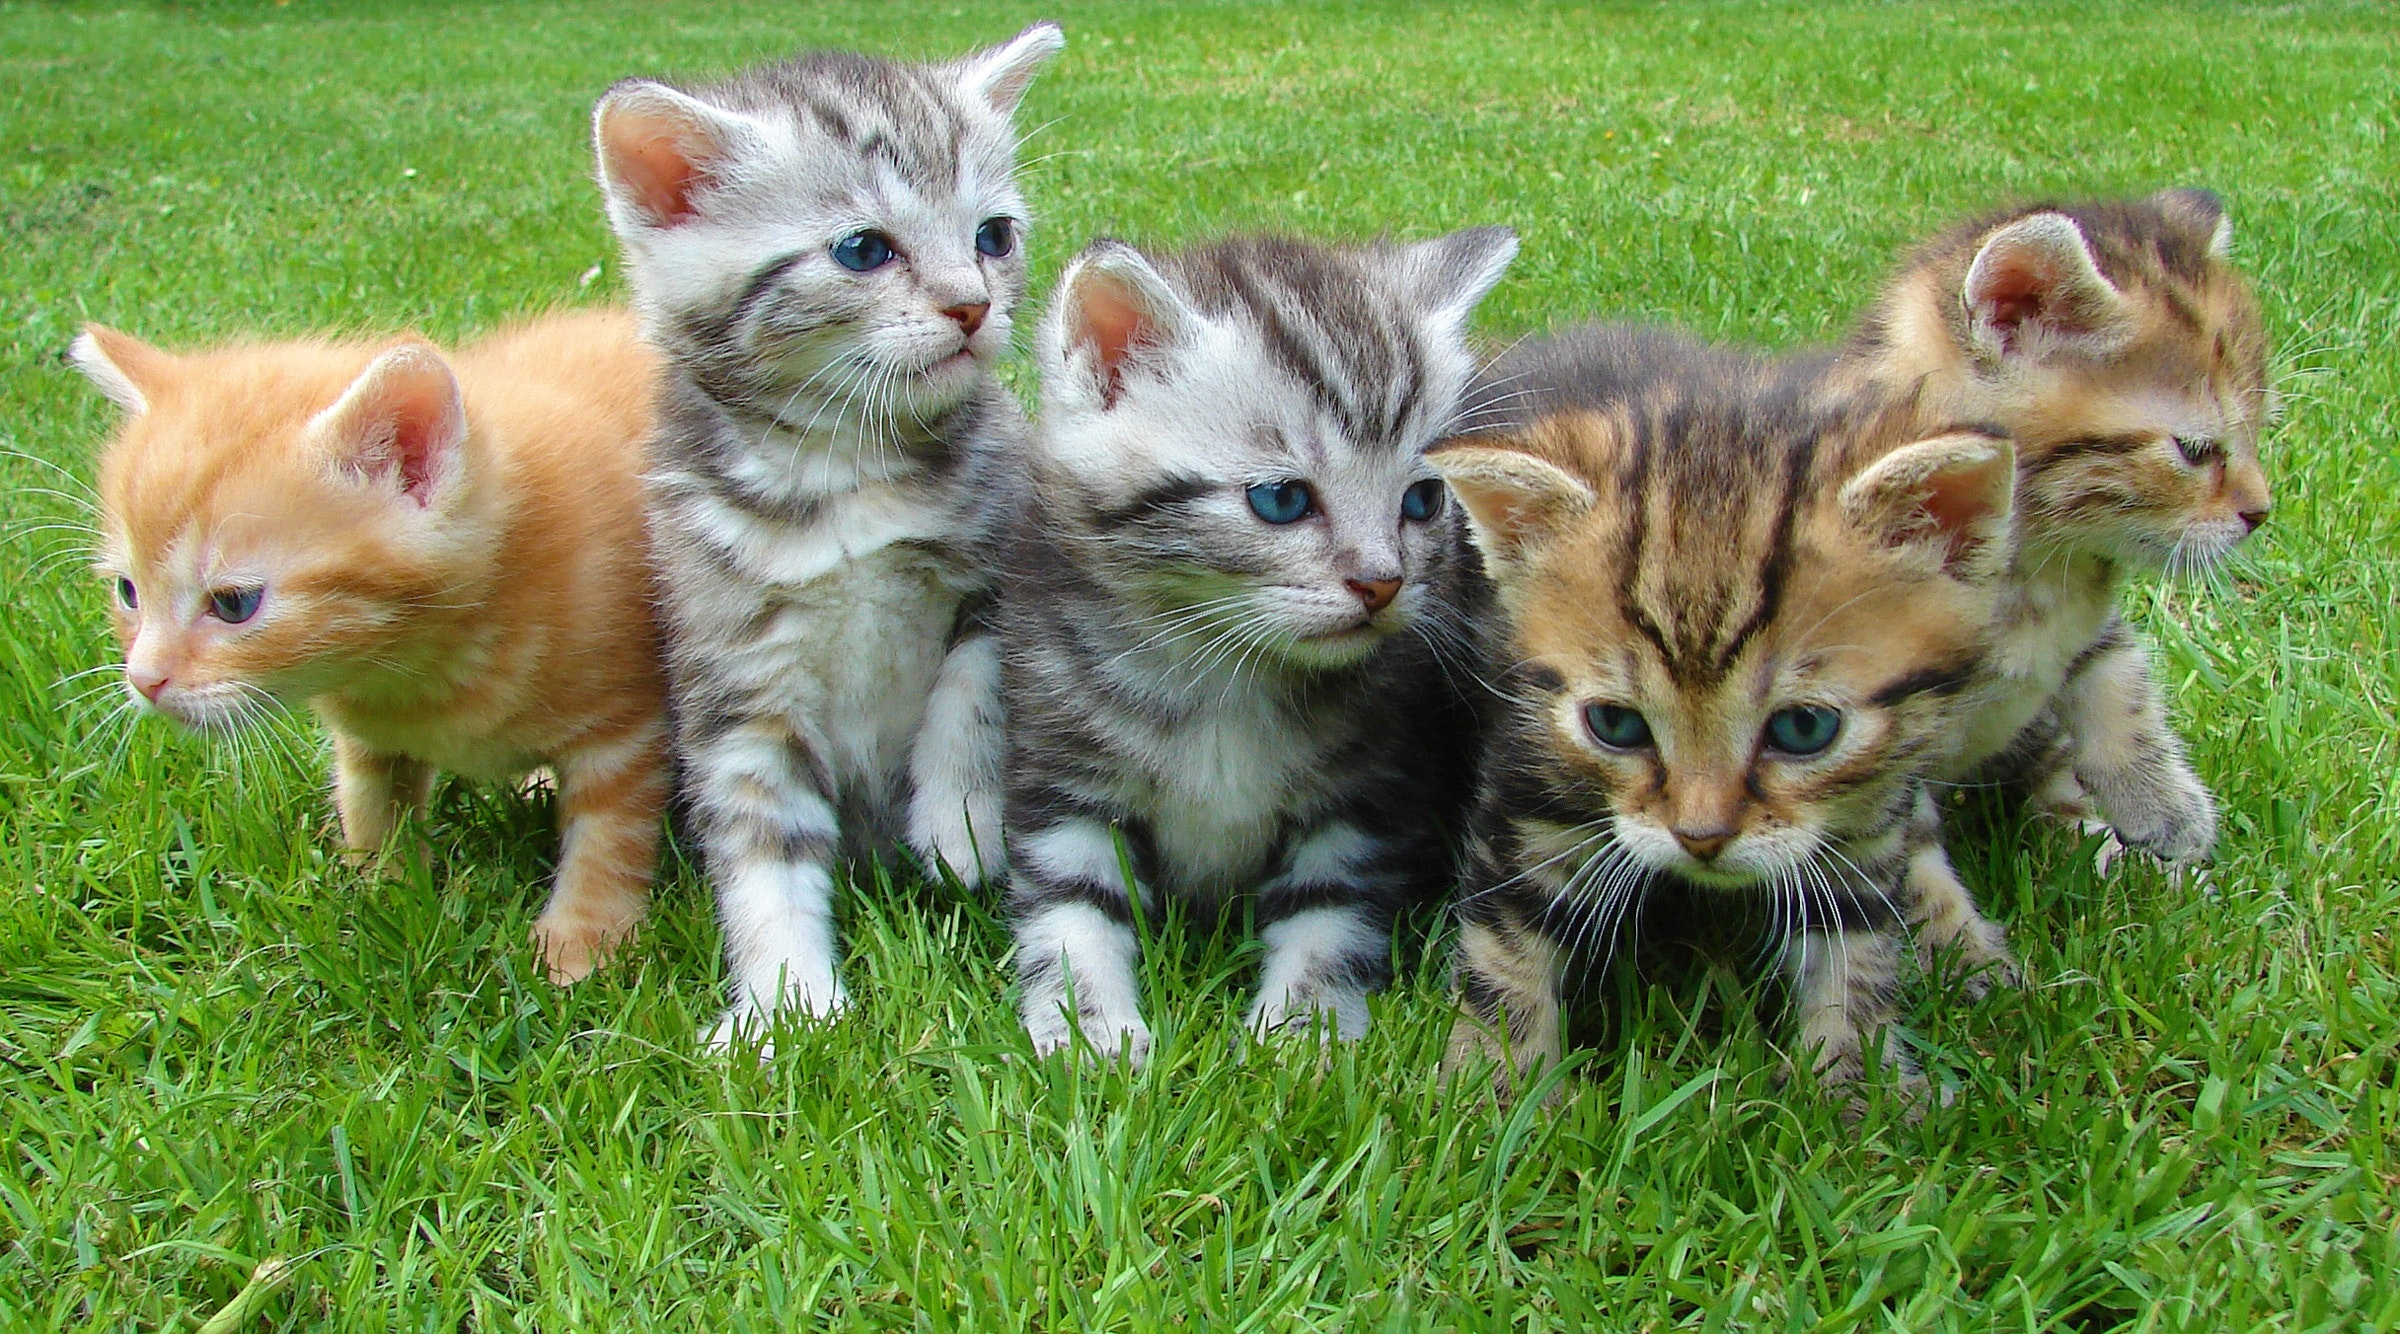 Kittens in Grass